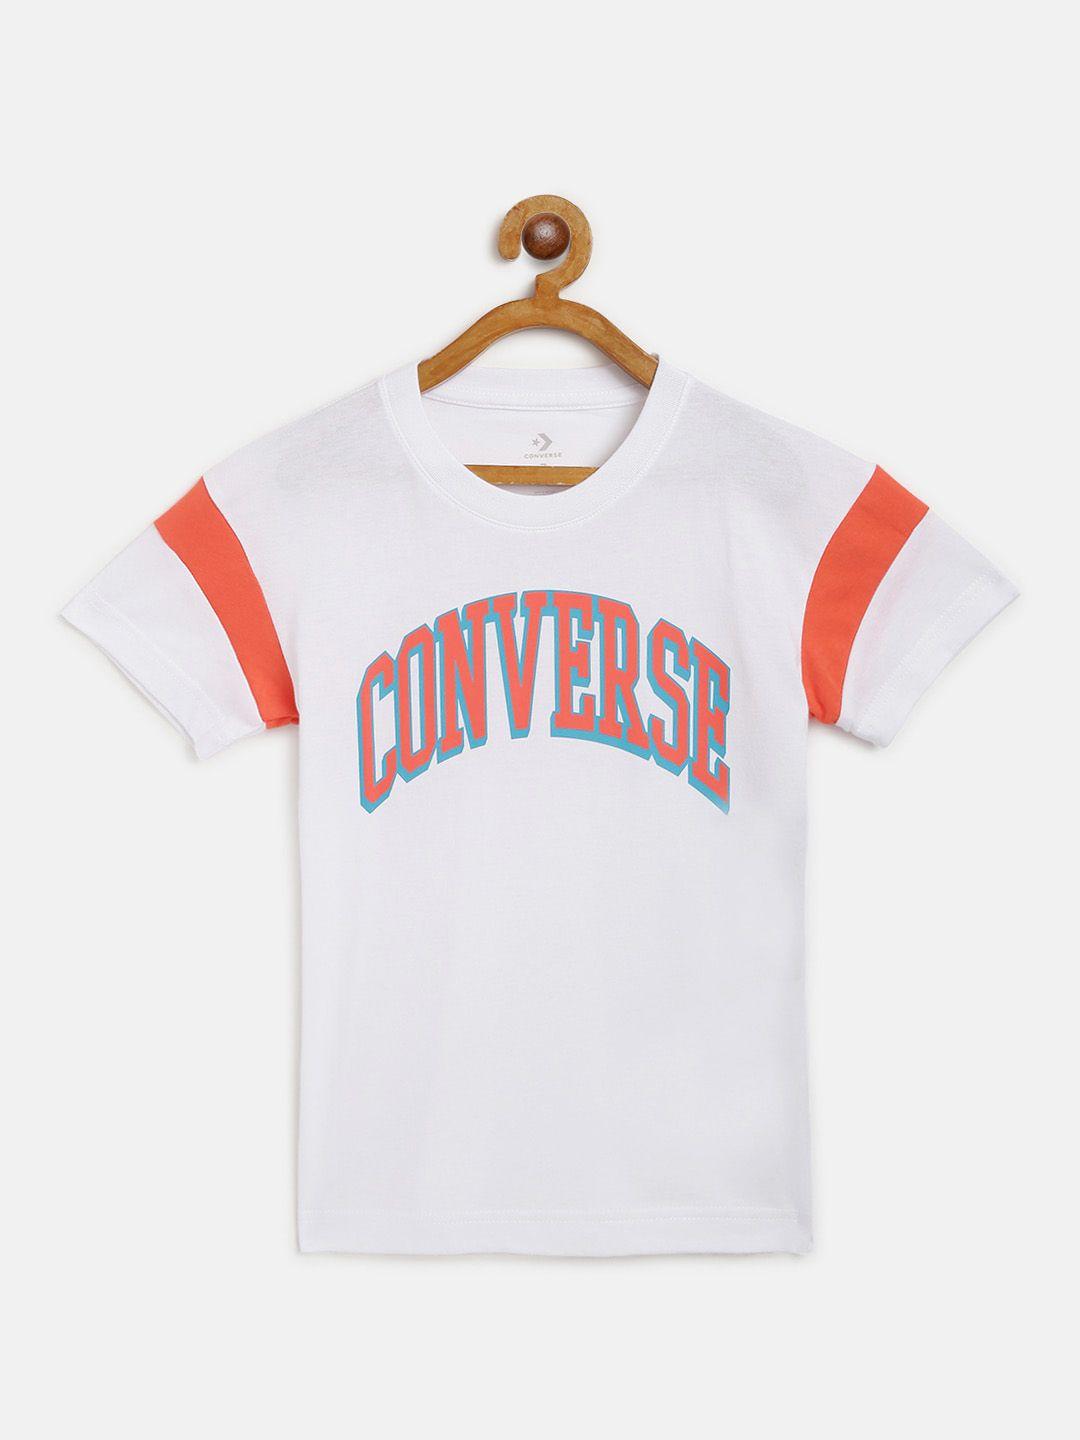 converse-boys-white-&-coral-orange-brand-logo-print-round-neck-t-shirt